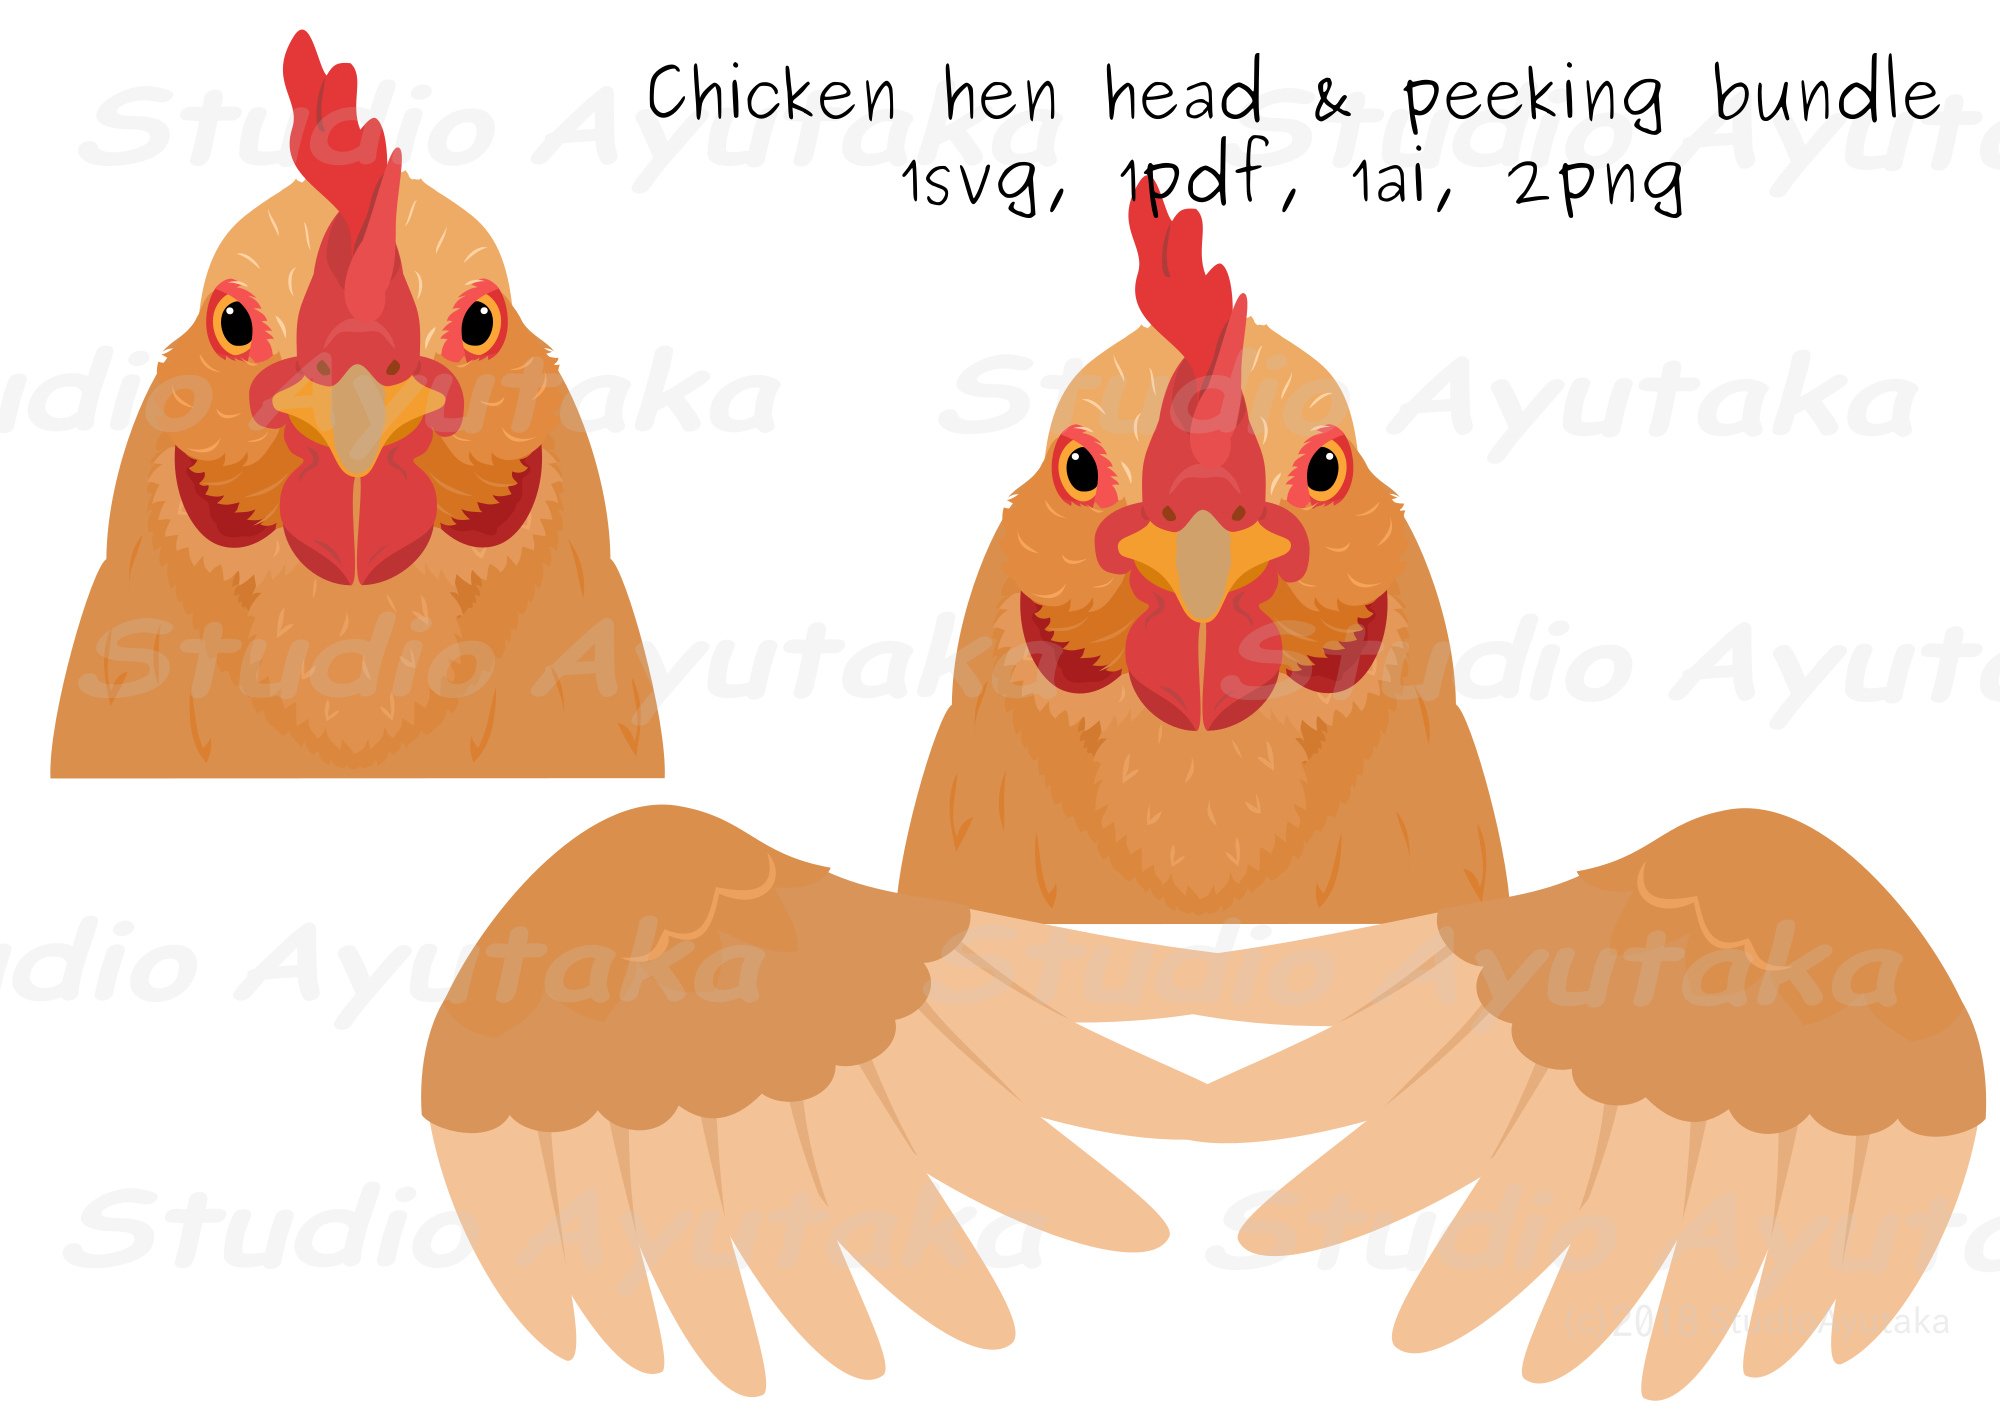 brown chicken hen peeking design cover image.